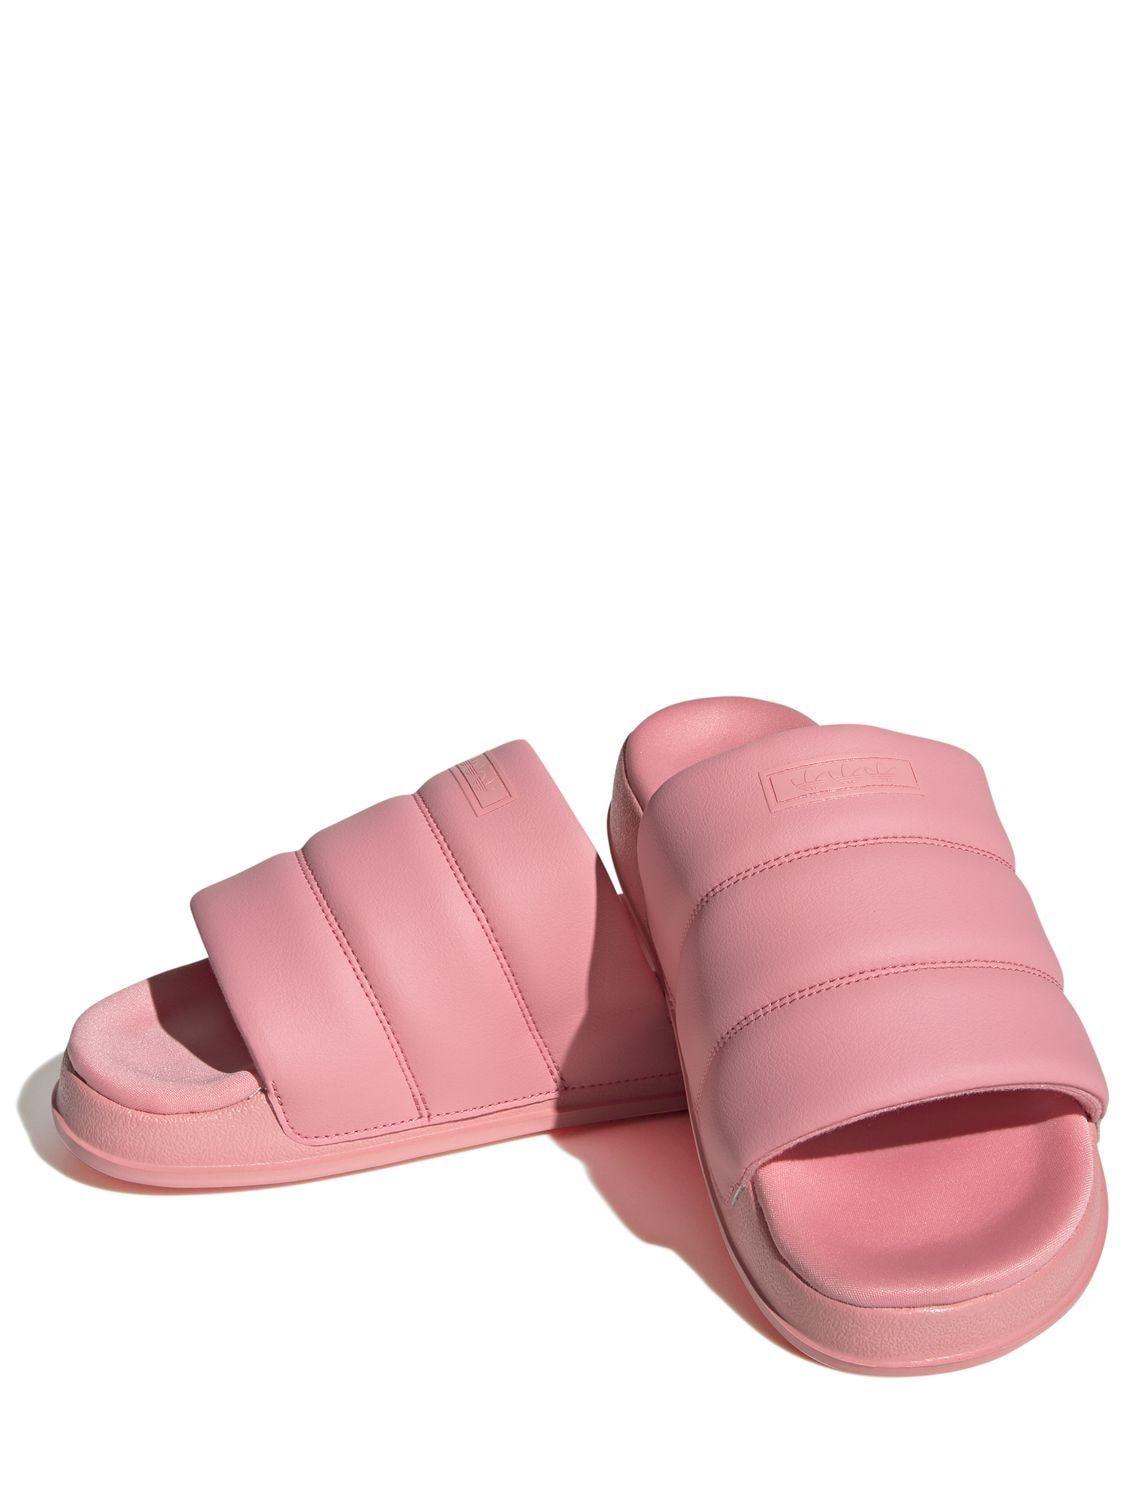 adidas Originals Adilette Sandals in Pink | Lyst